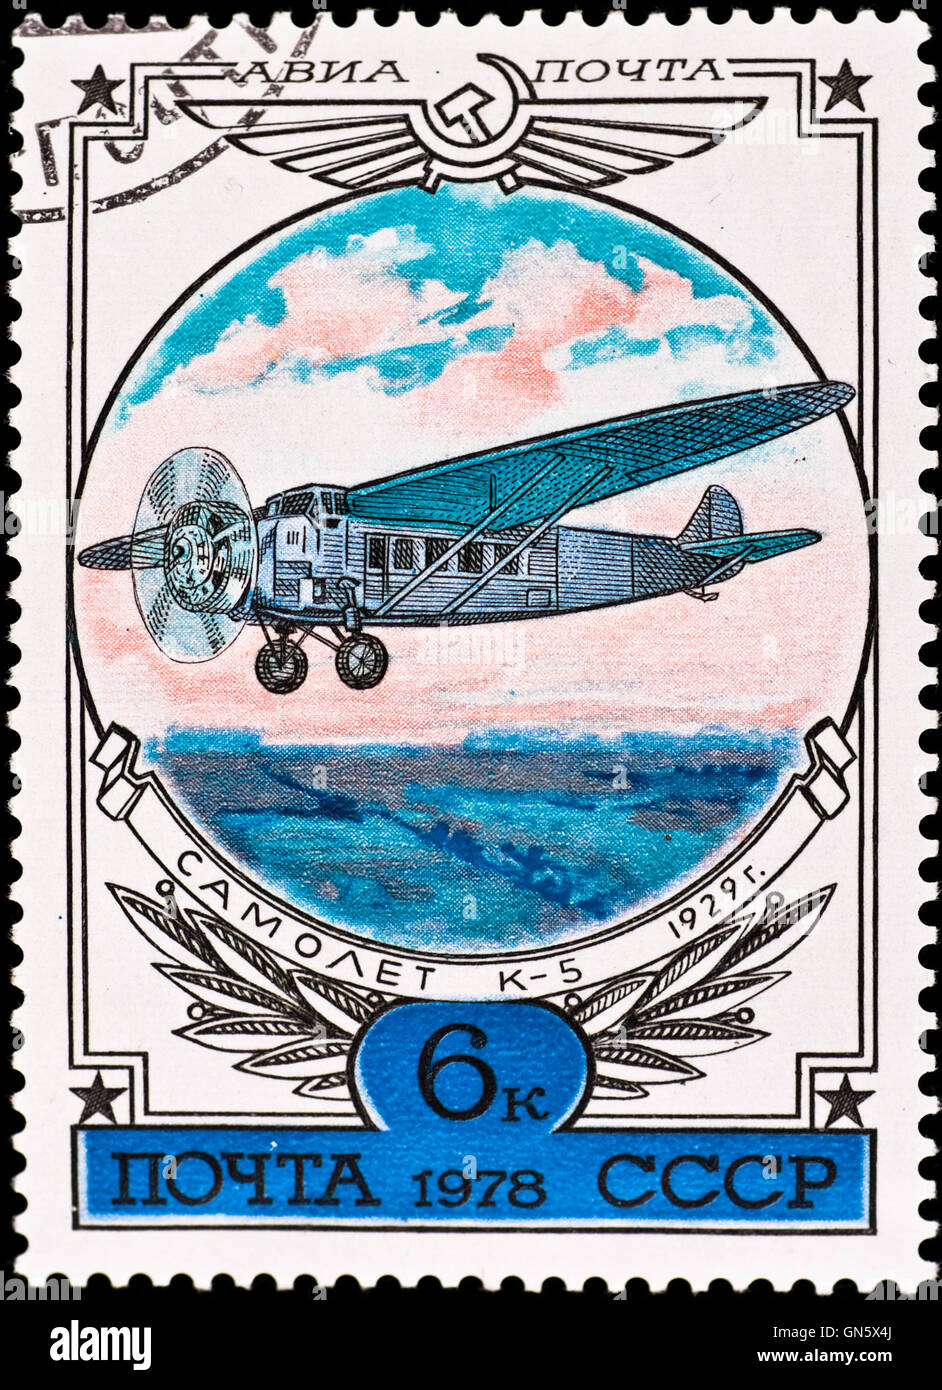 postage stamp show airplane k-5 Stock Photo